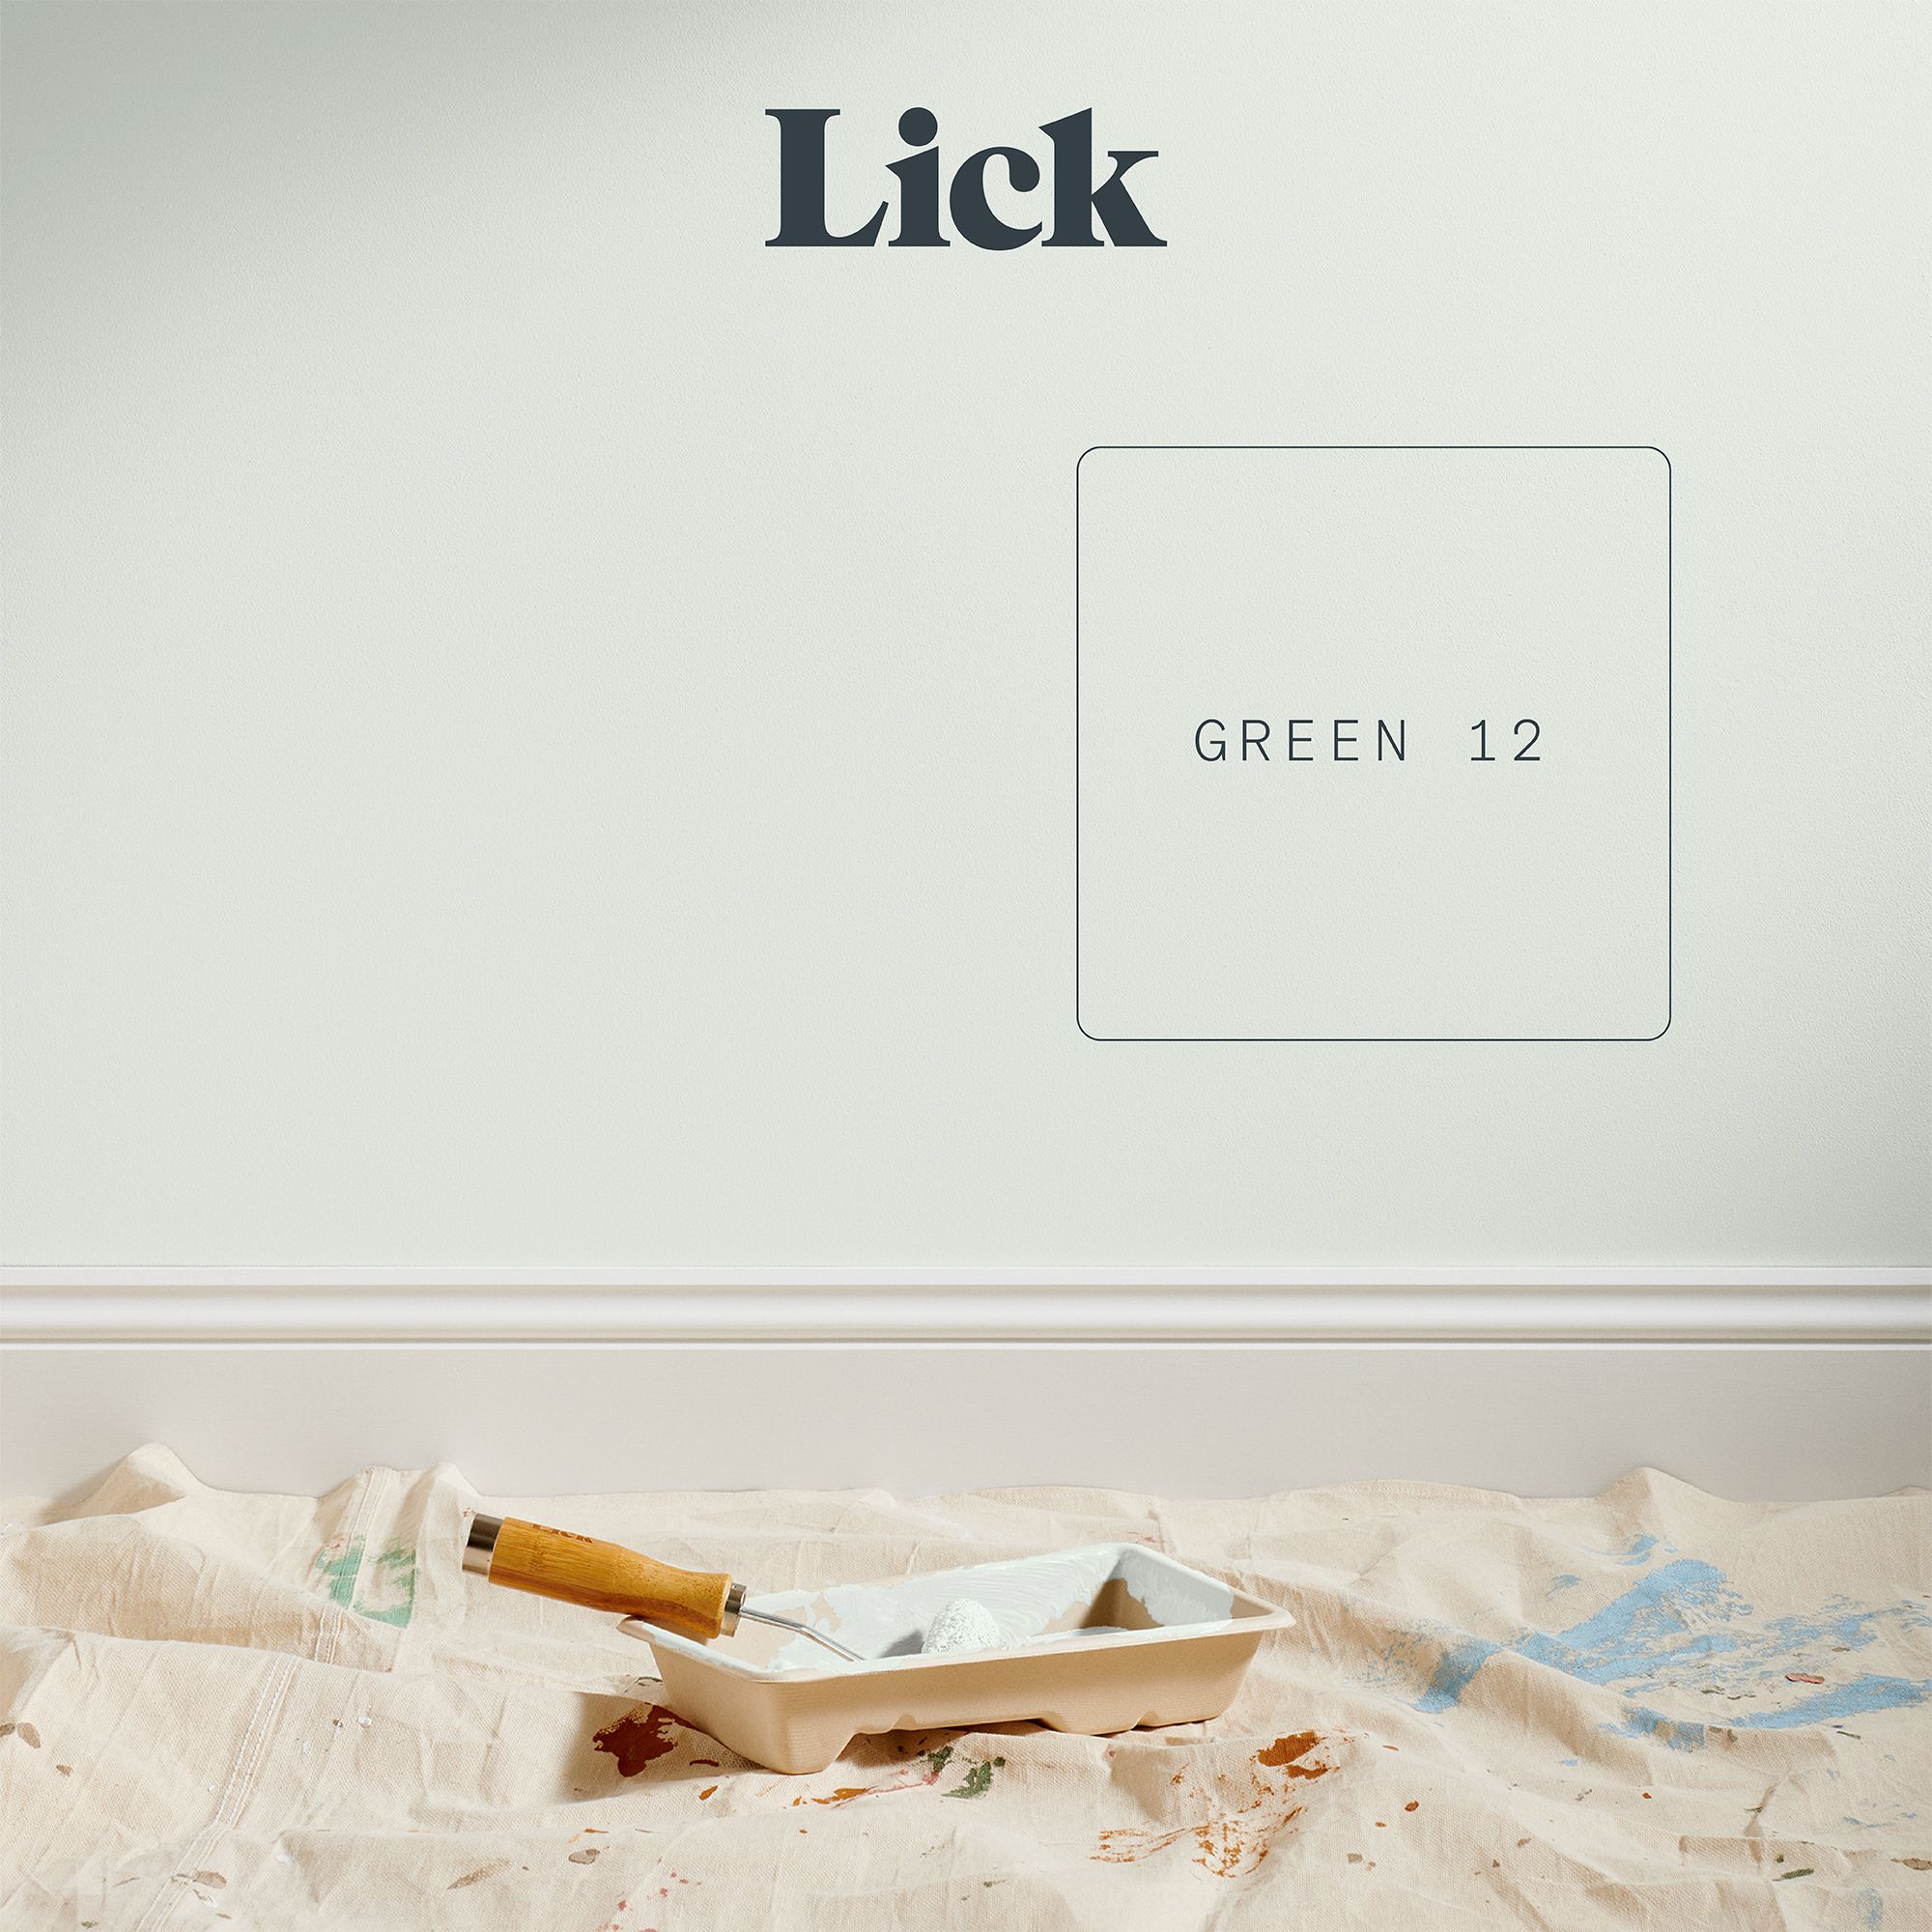 Lick Green 12 Eggshell Emulsion paint, 2.5L